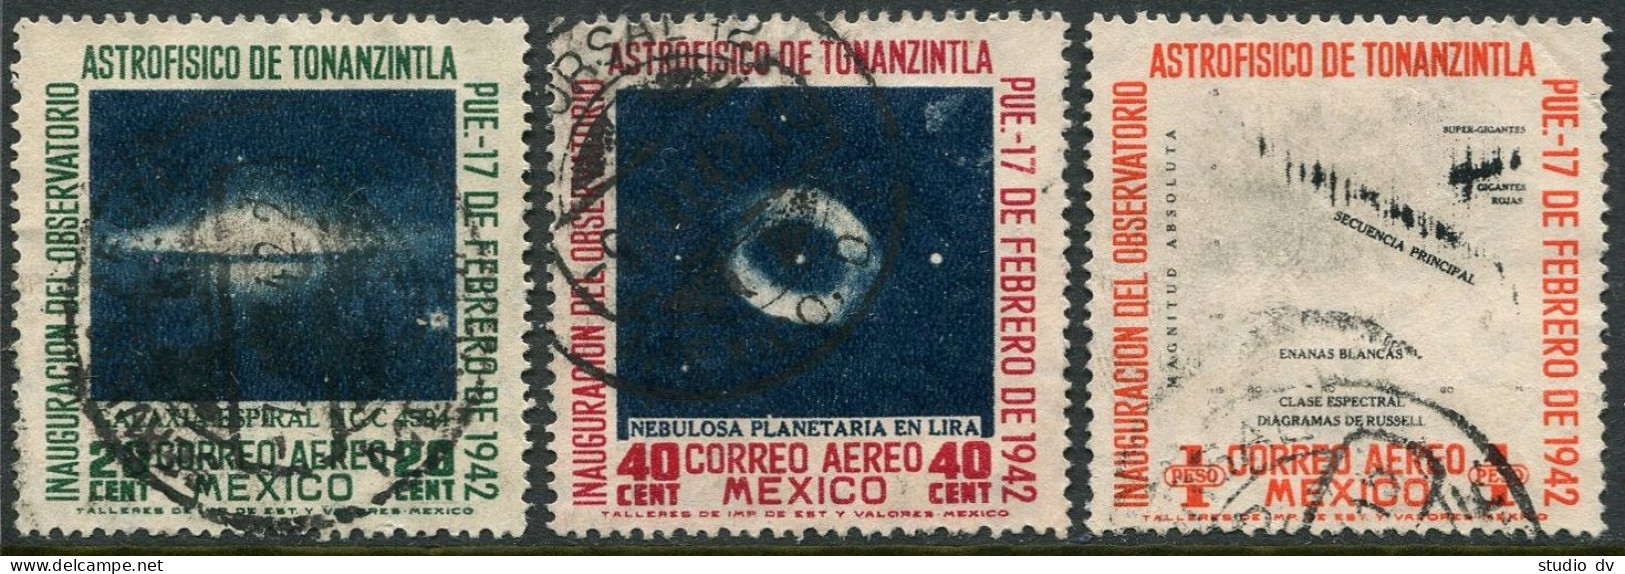 Mexico C123-C126, Used. Michel 813-815. Air Post 1942. Astrophysics. - Mexico